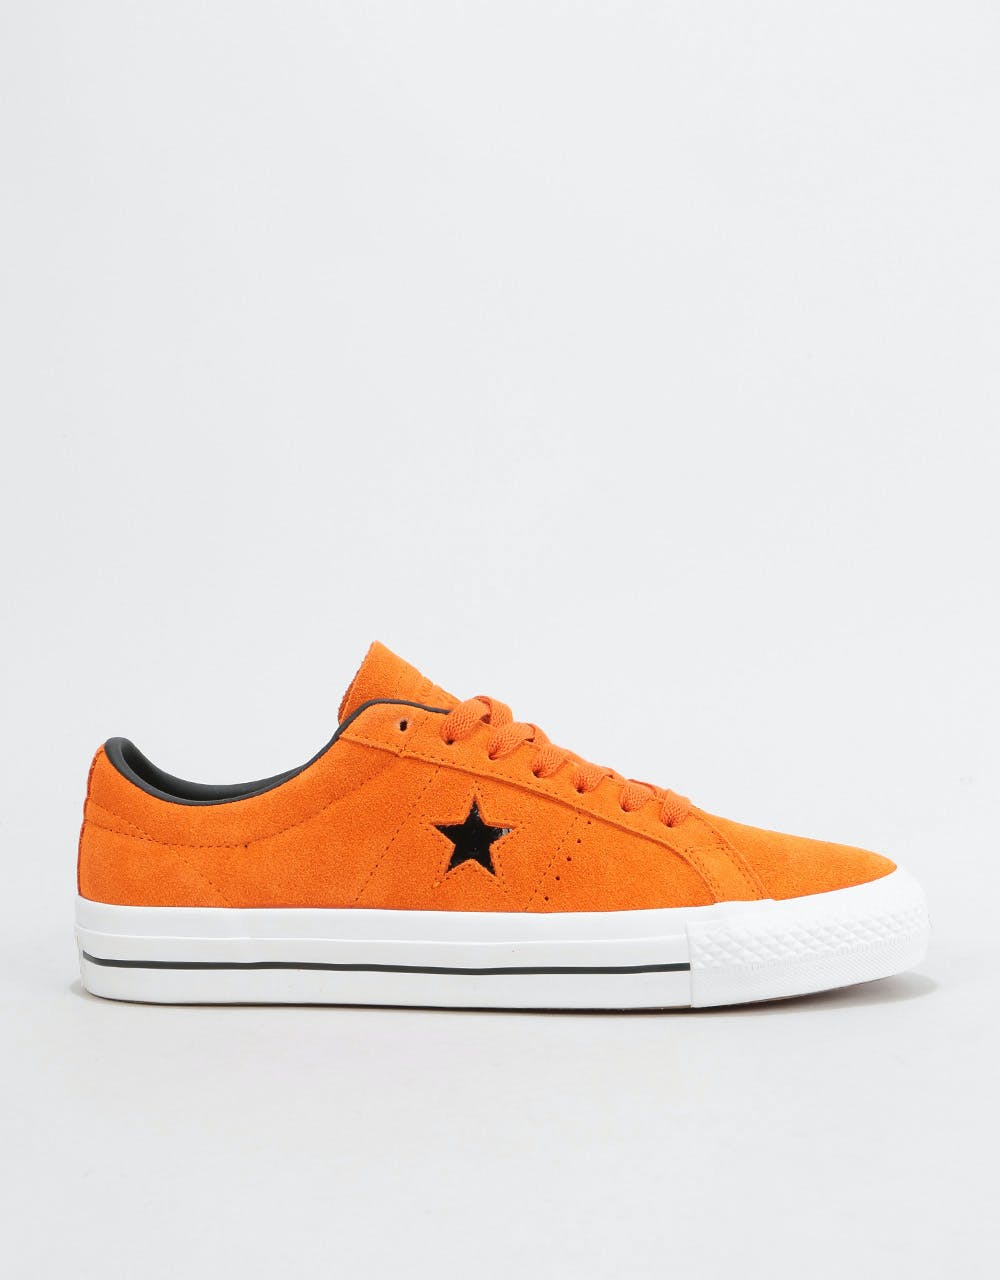 Converse One Star Pro Ox Skate Shoes - Campfire Orange/Black/White